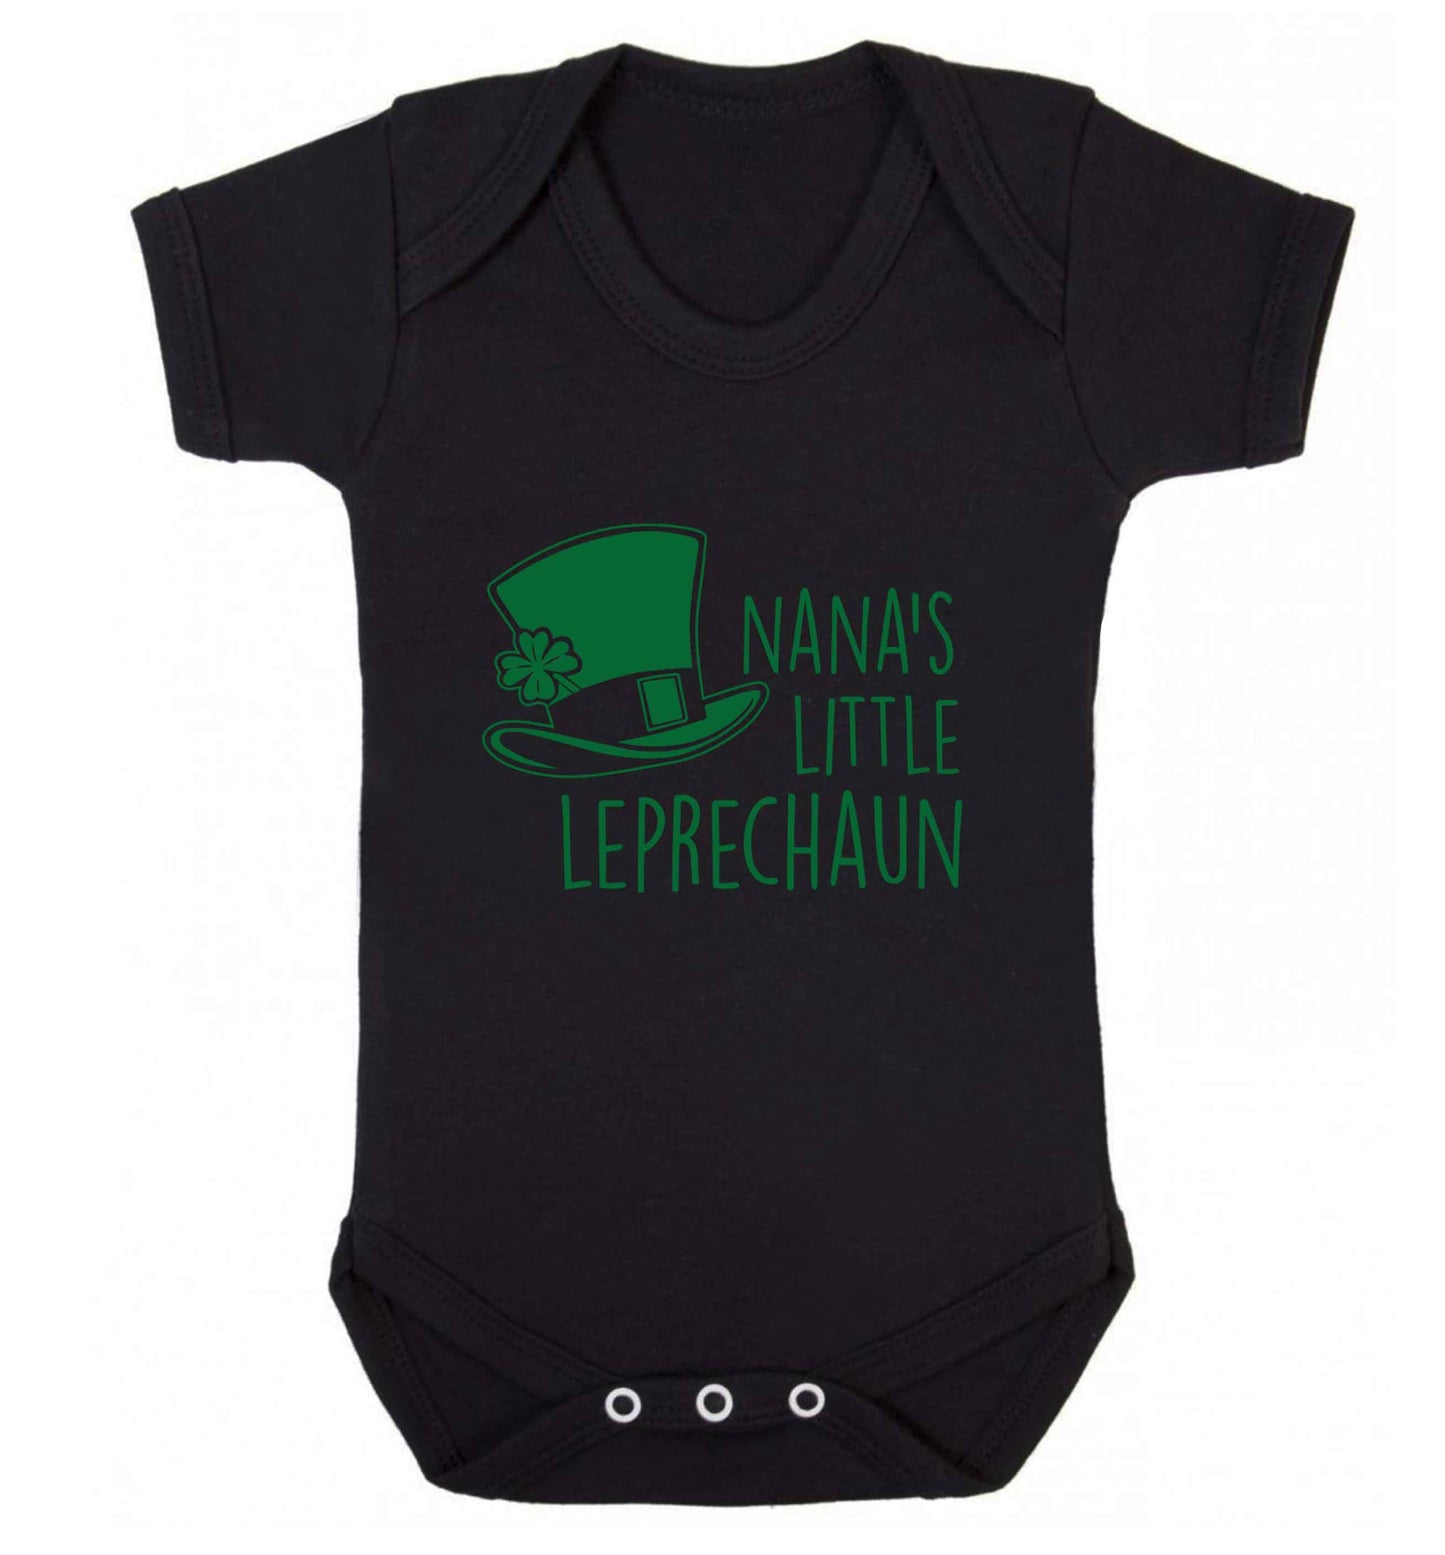 Nana's little leprechaun baby vest black 18-24 months